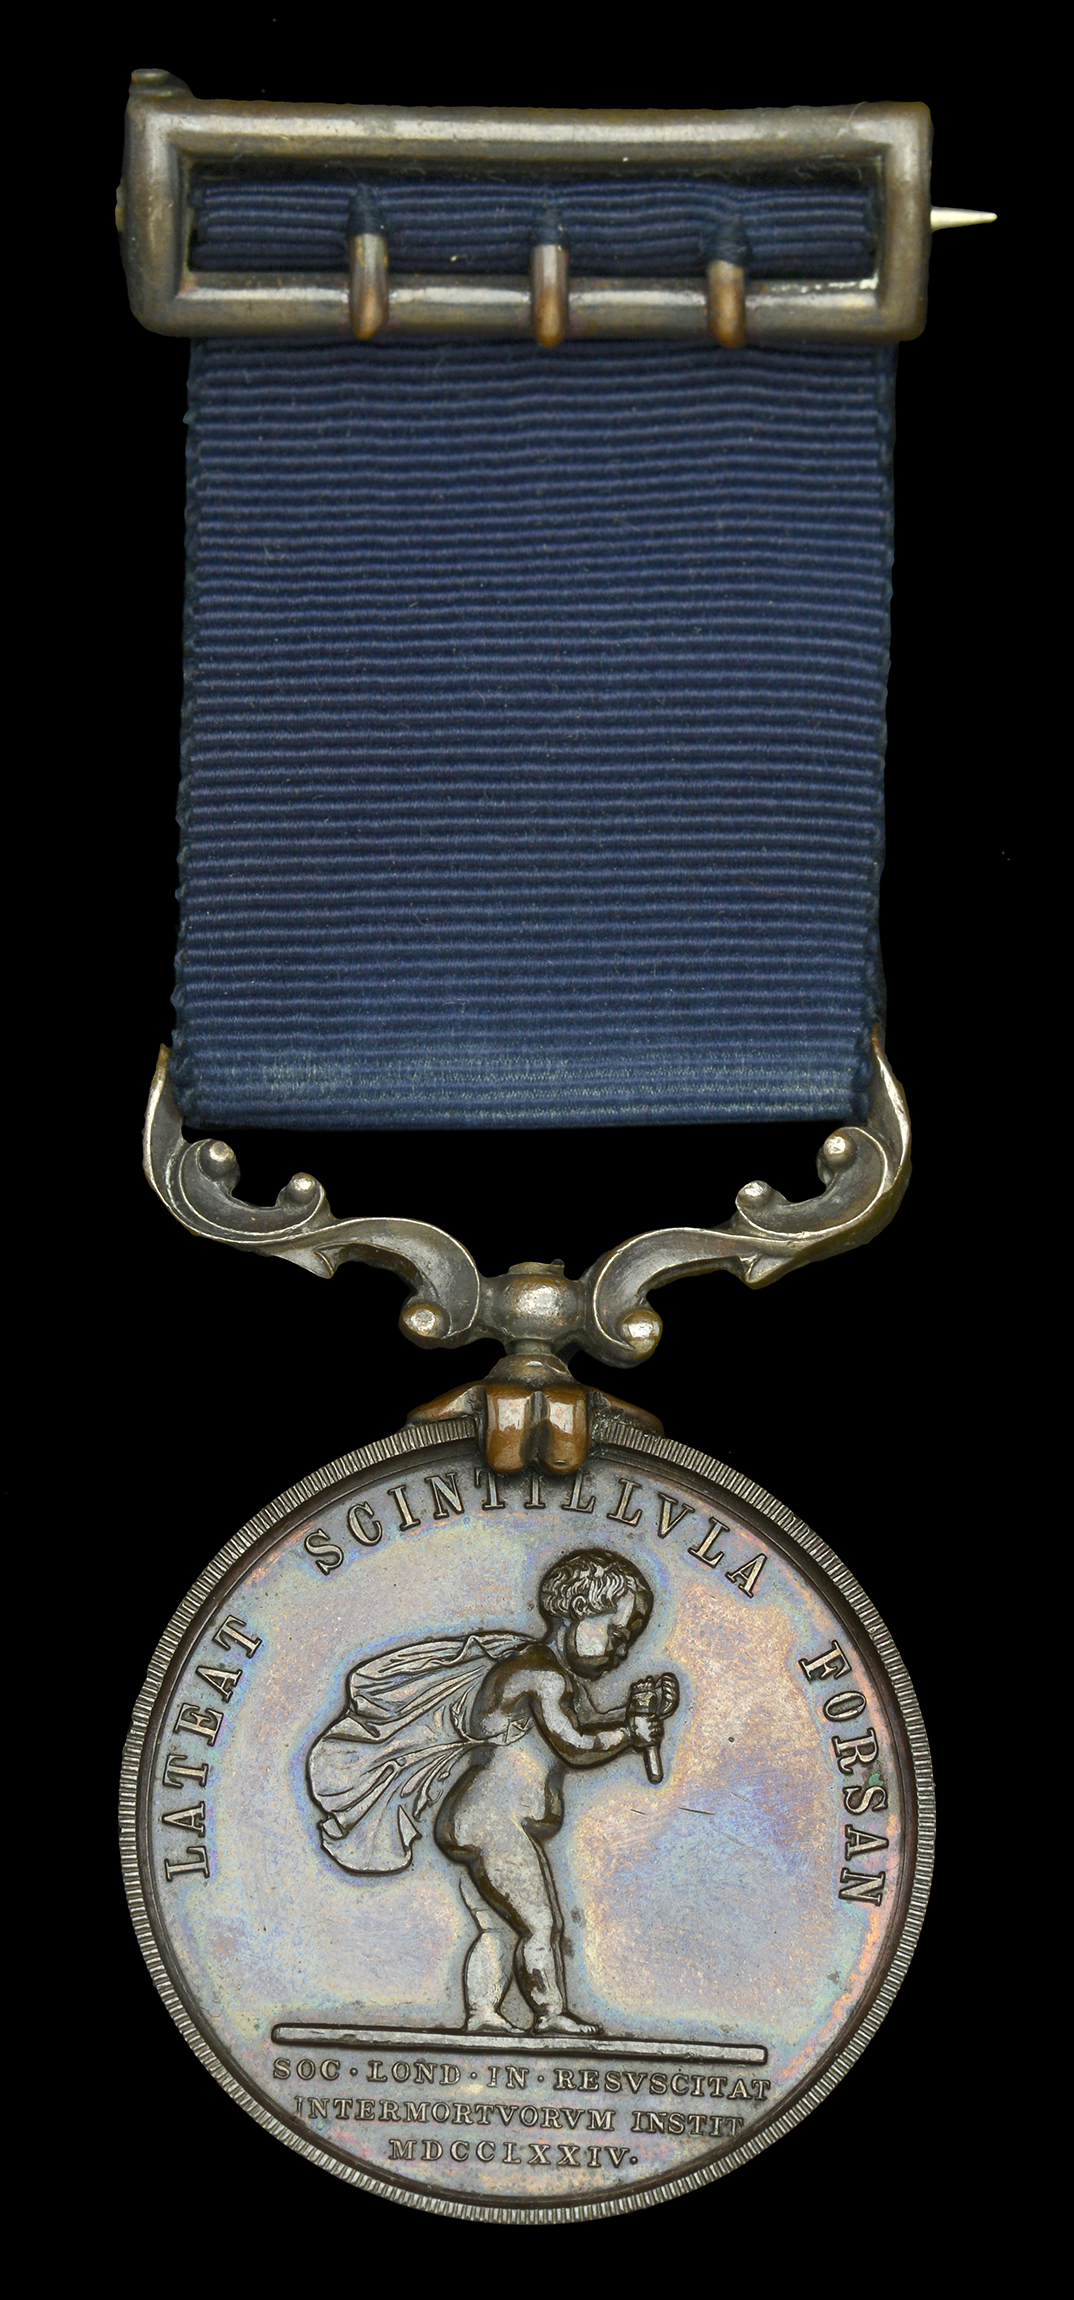 The historically important Royal Humane Society Medal awarded to Sub-Lieutenant C. D. Bury,...